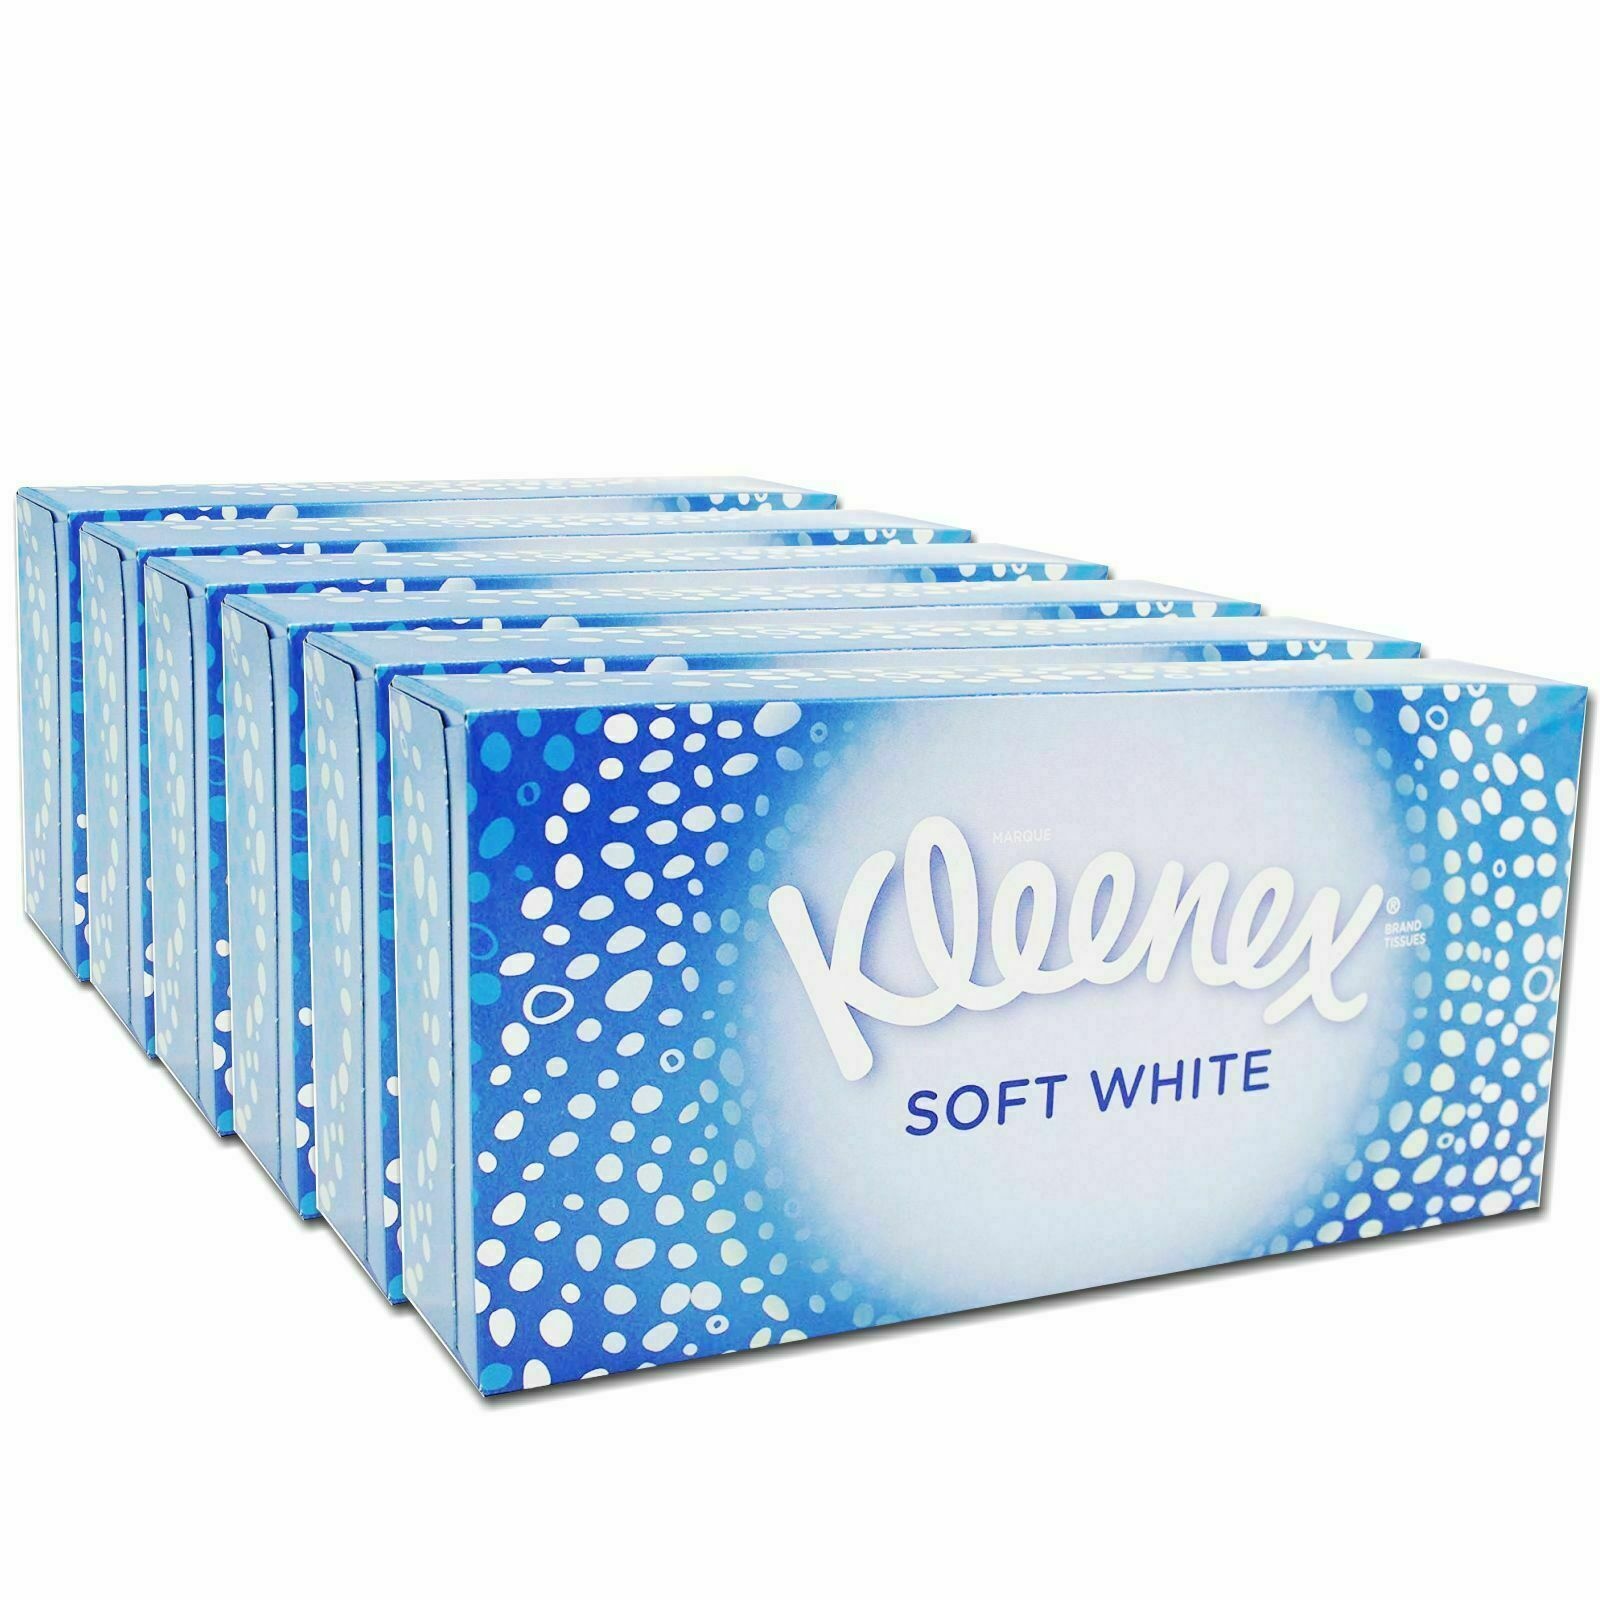 Microbe Ik heb het erkend Draai vast Kleenex Kleenex Zakdoekjes,Tissues Soft Whiete 70 st 2 laag - Europower bv